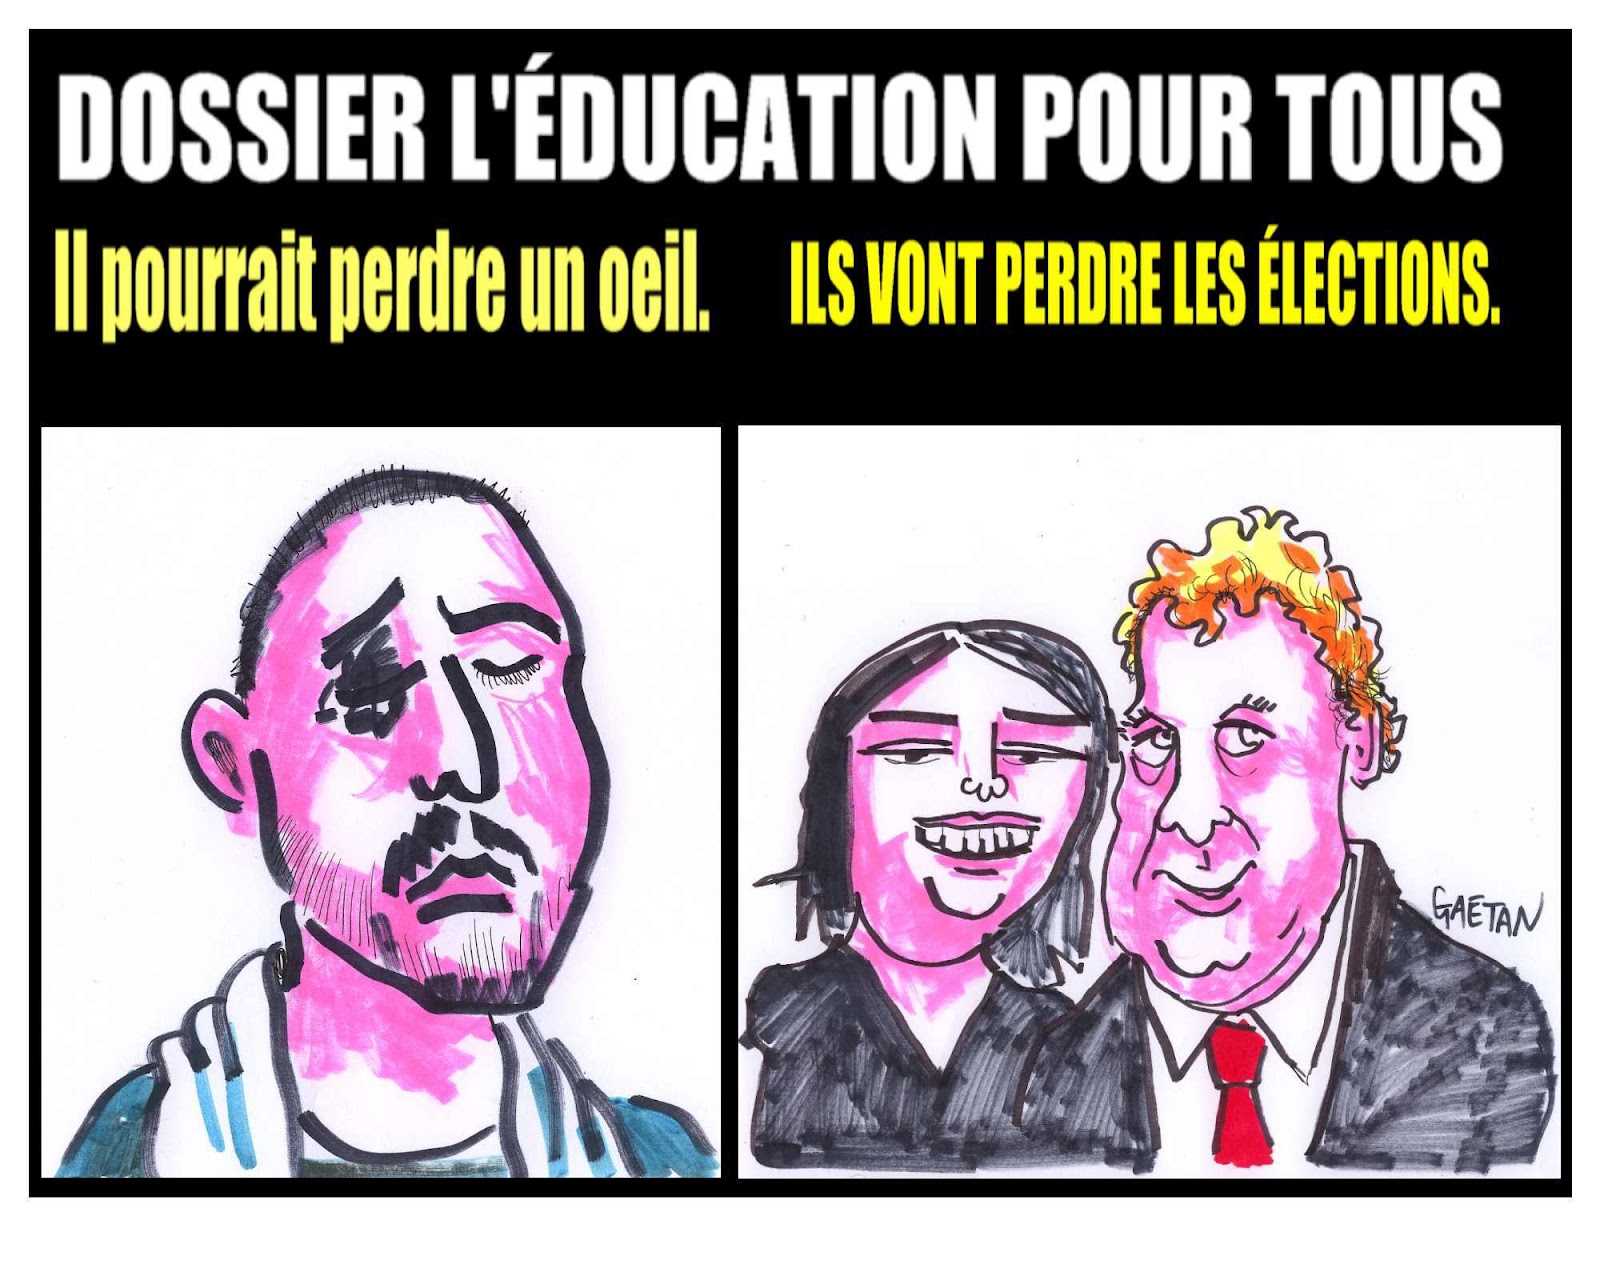 dossier_education_gaetan_bouchard